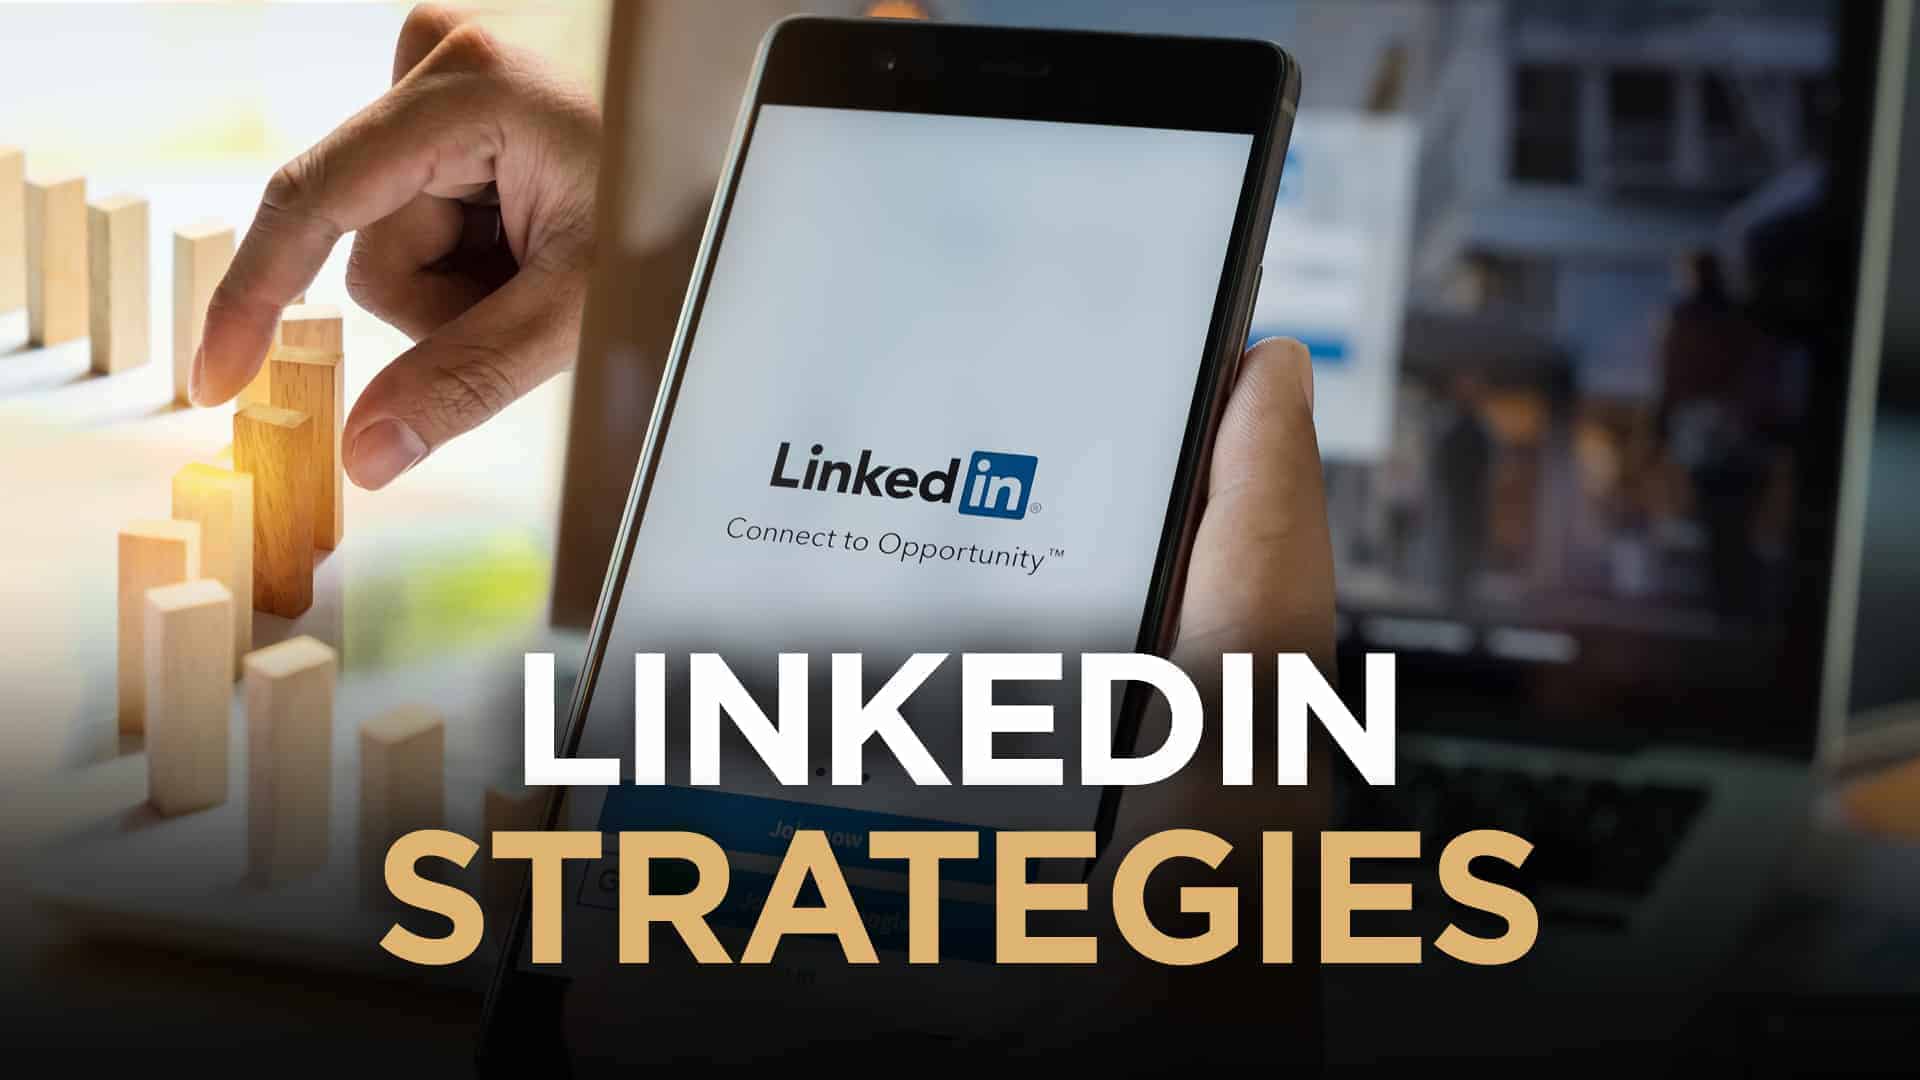 LinkedIn Strategies